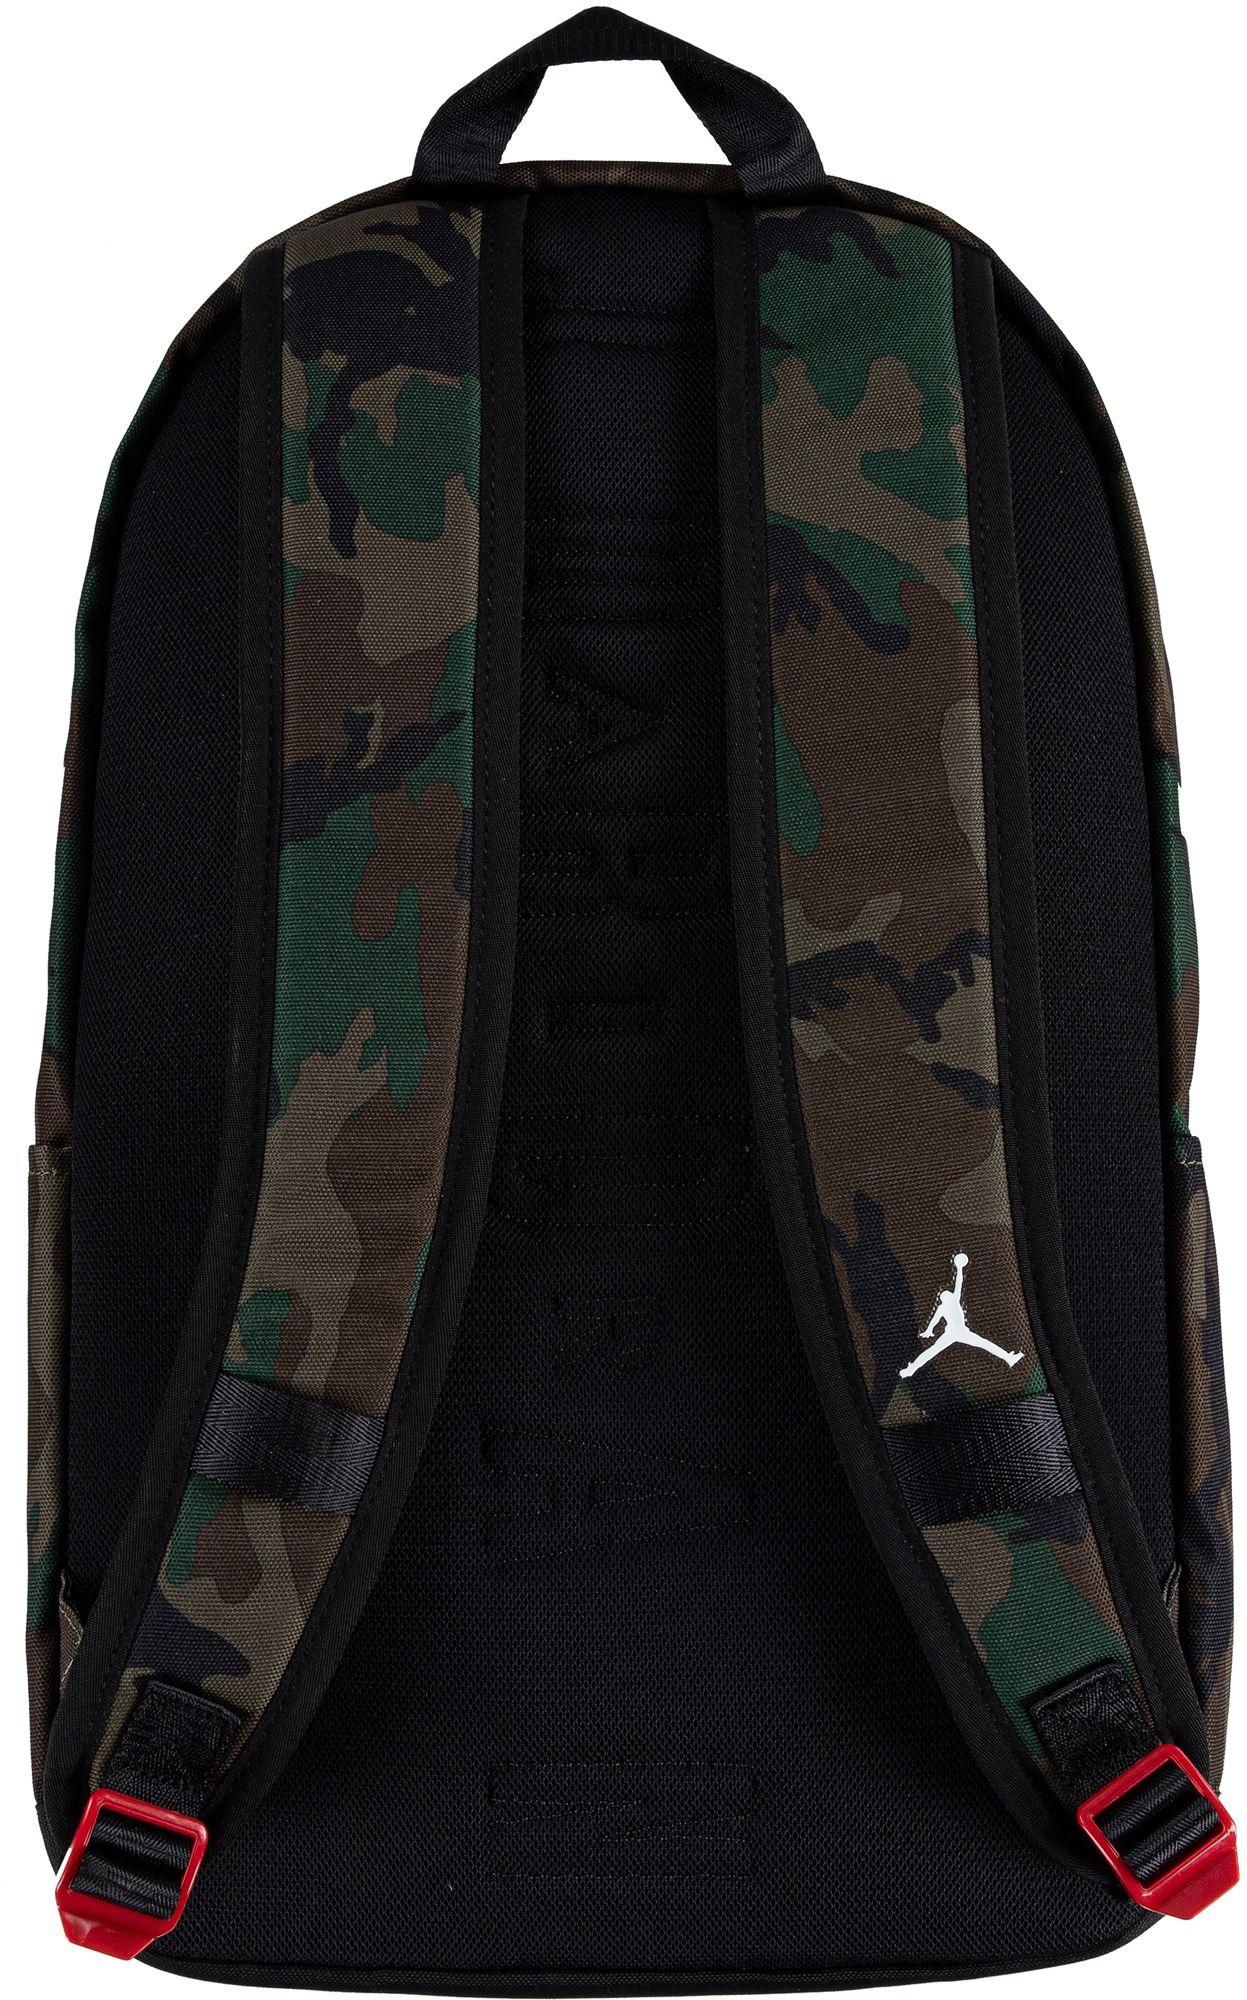 Nike Jordan Air Patrol Backpack in Black for Men - Lyst